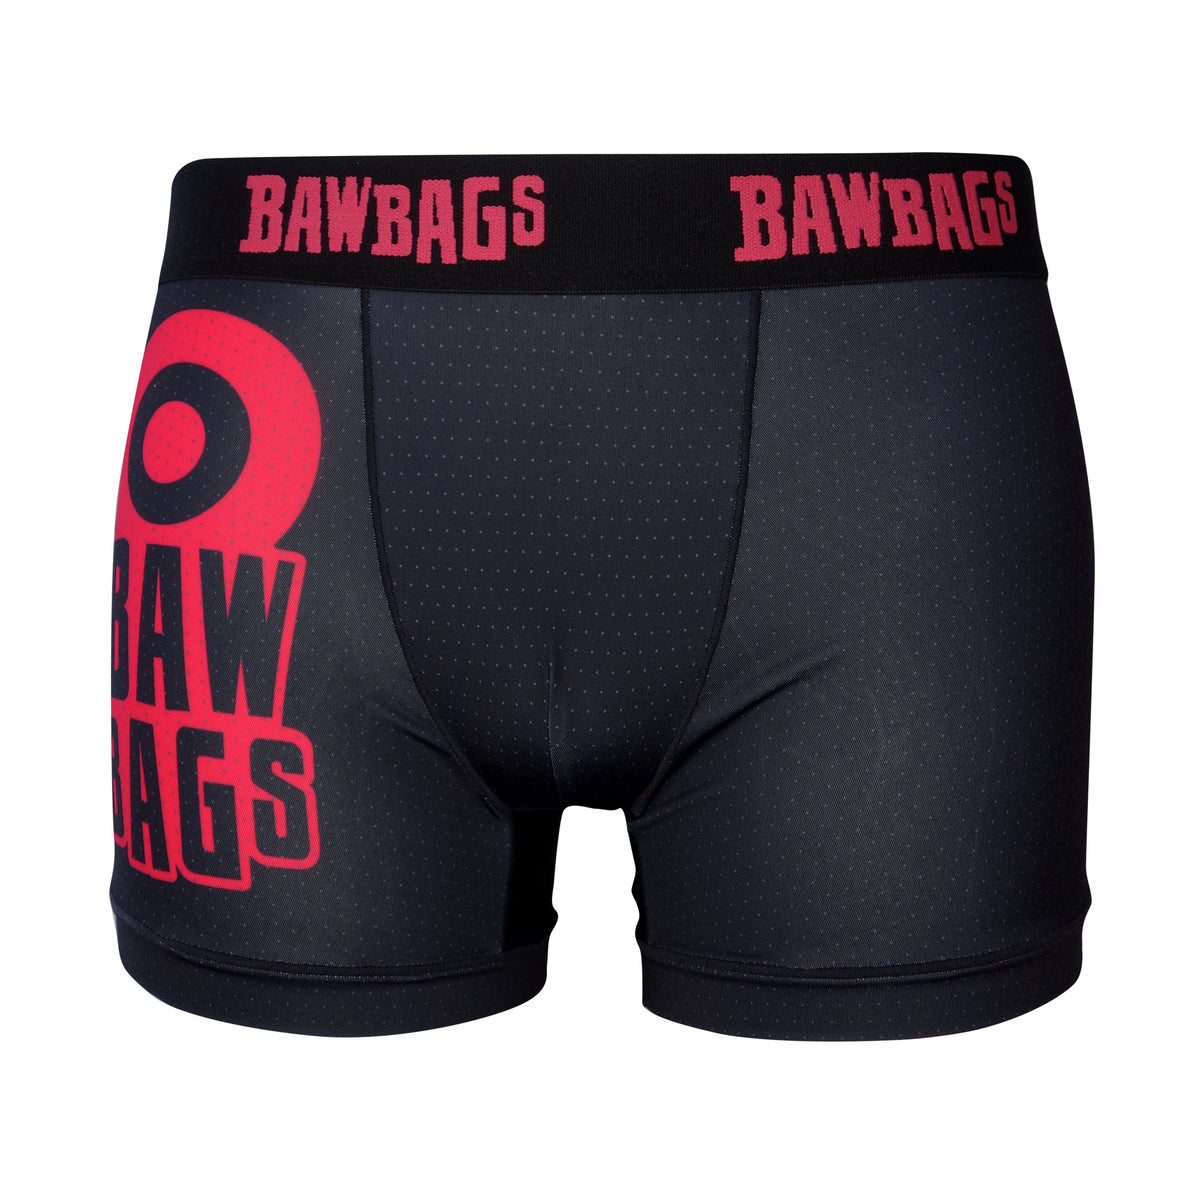 Cool De Sacs Bawler 3-Pack Technical Boxer Shorts